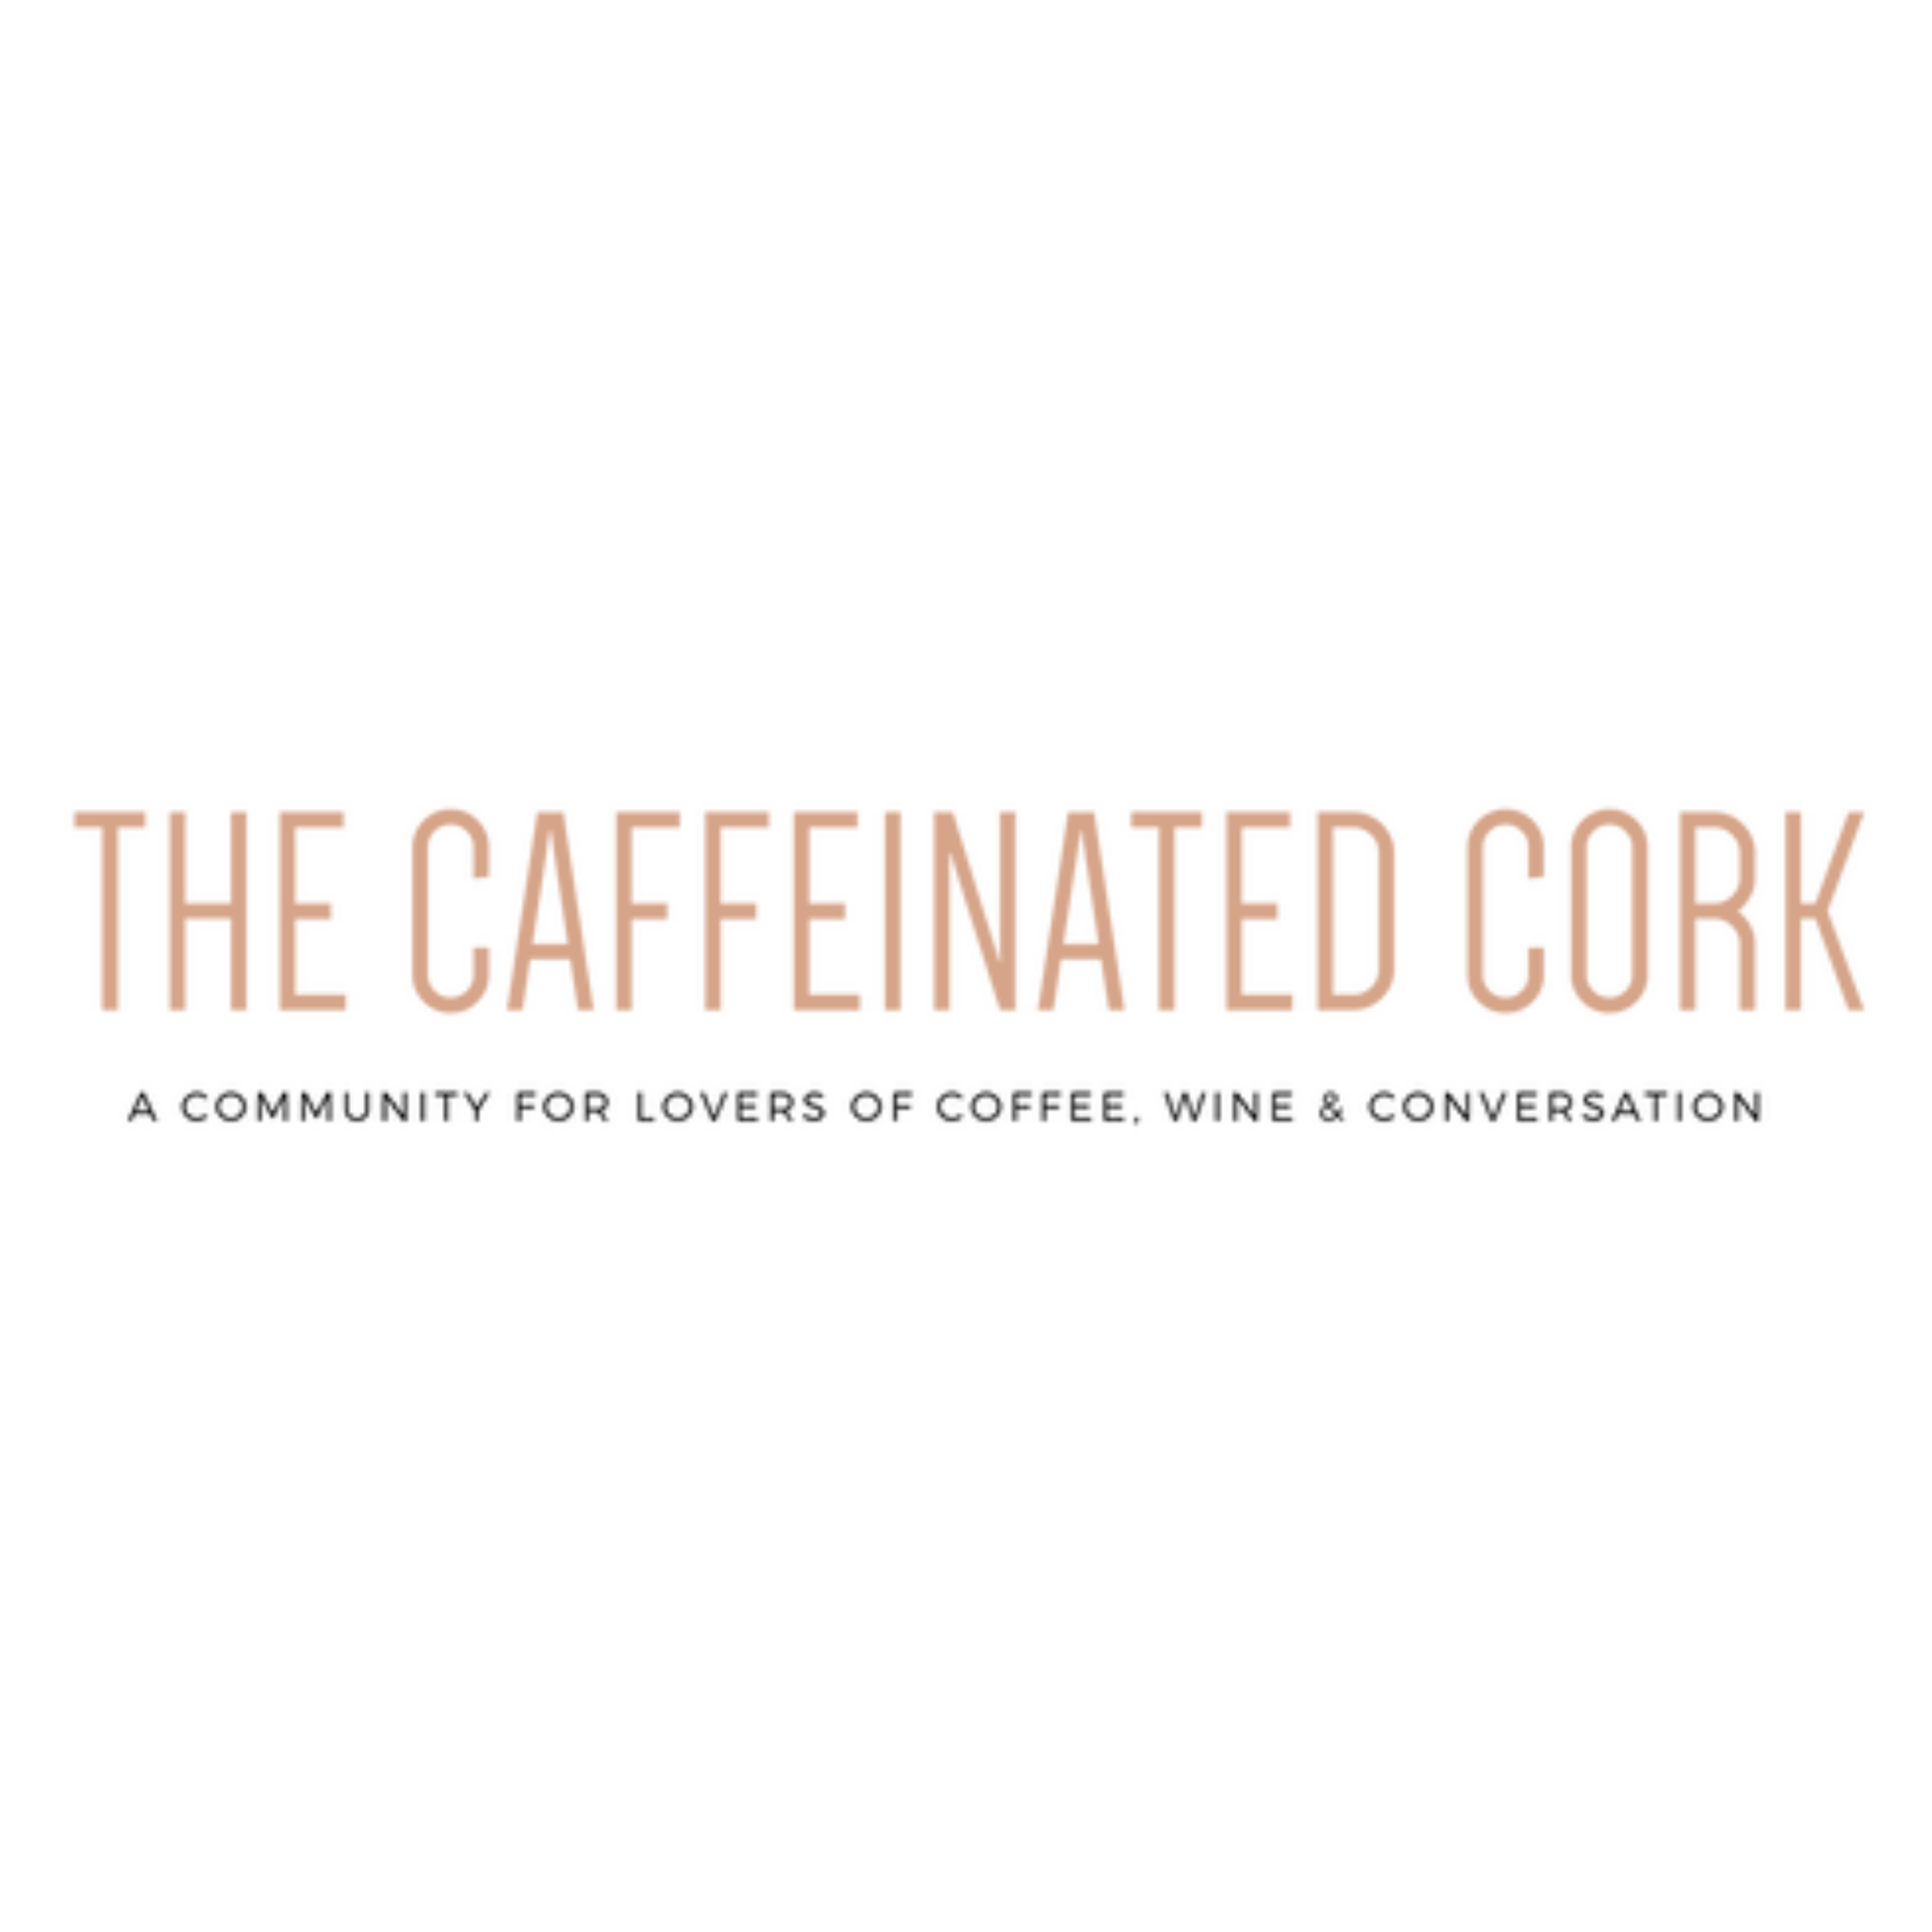 The Caffeinated Cork